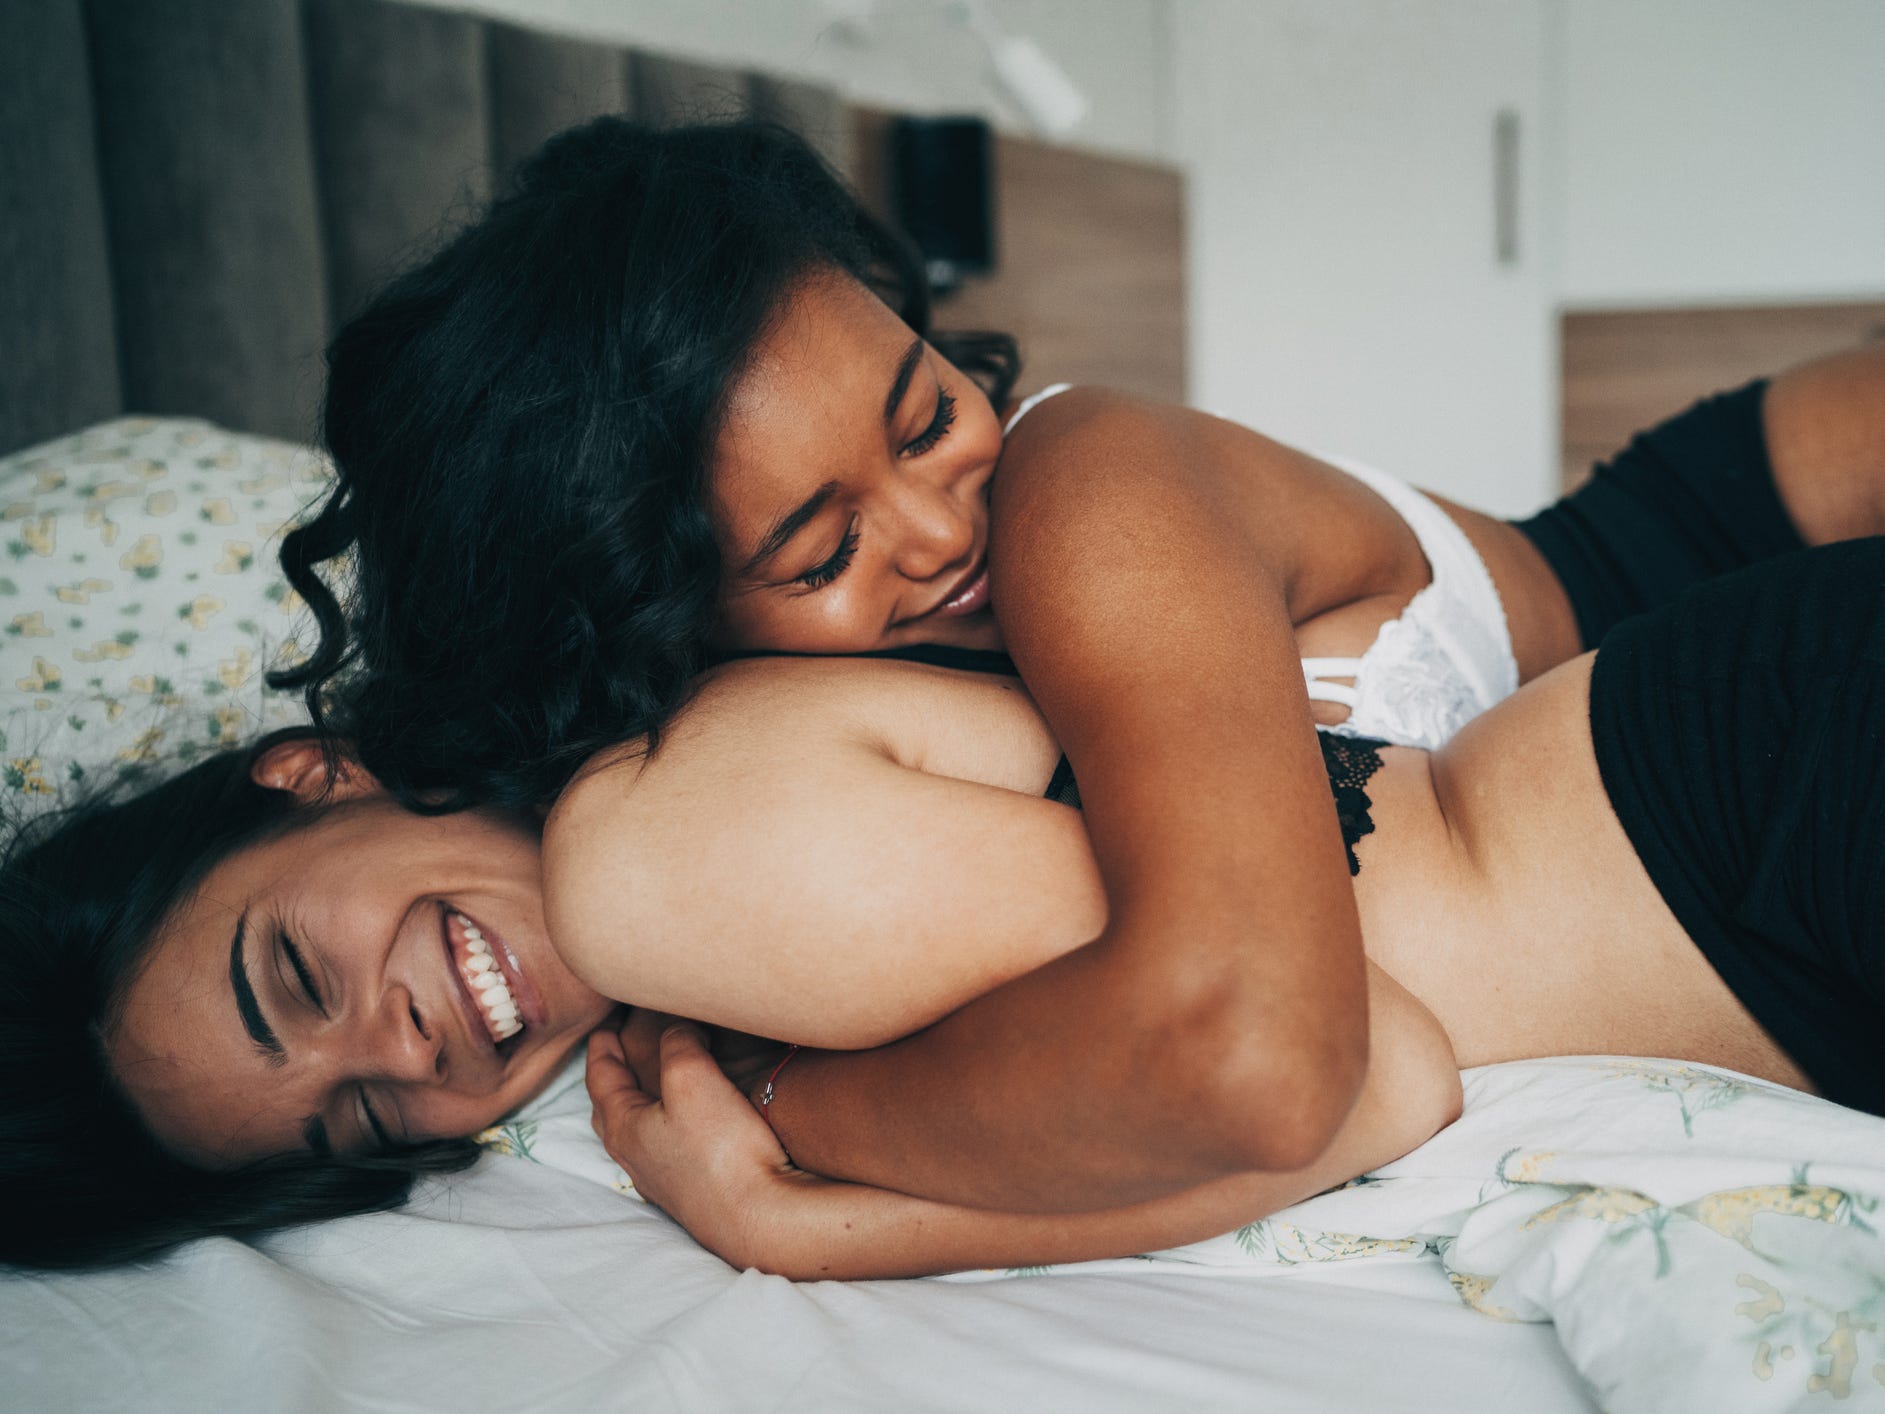 Women share their secrets for making penetrative sex more pleasurable image